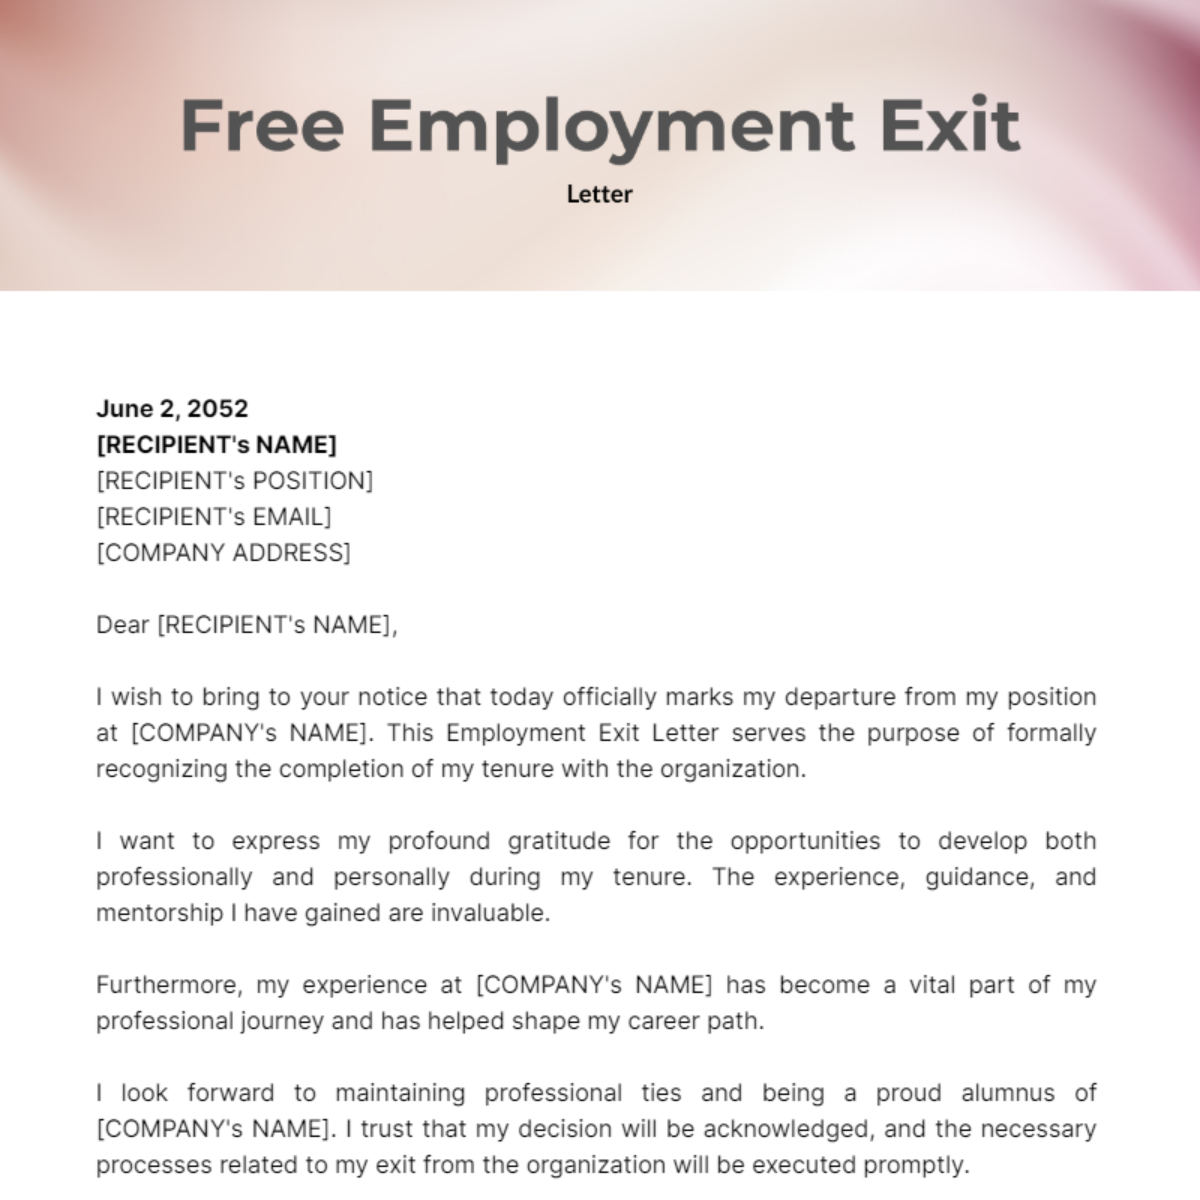 Employment Exit Letter Template